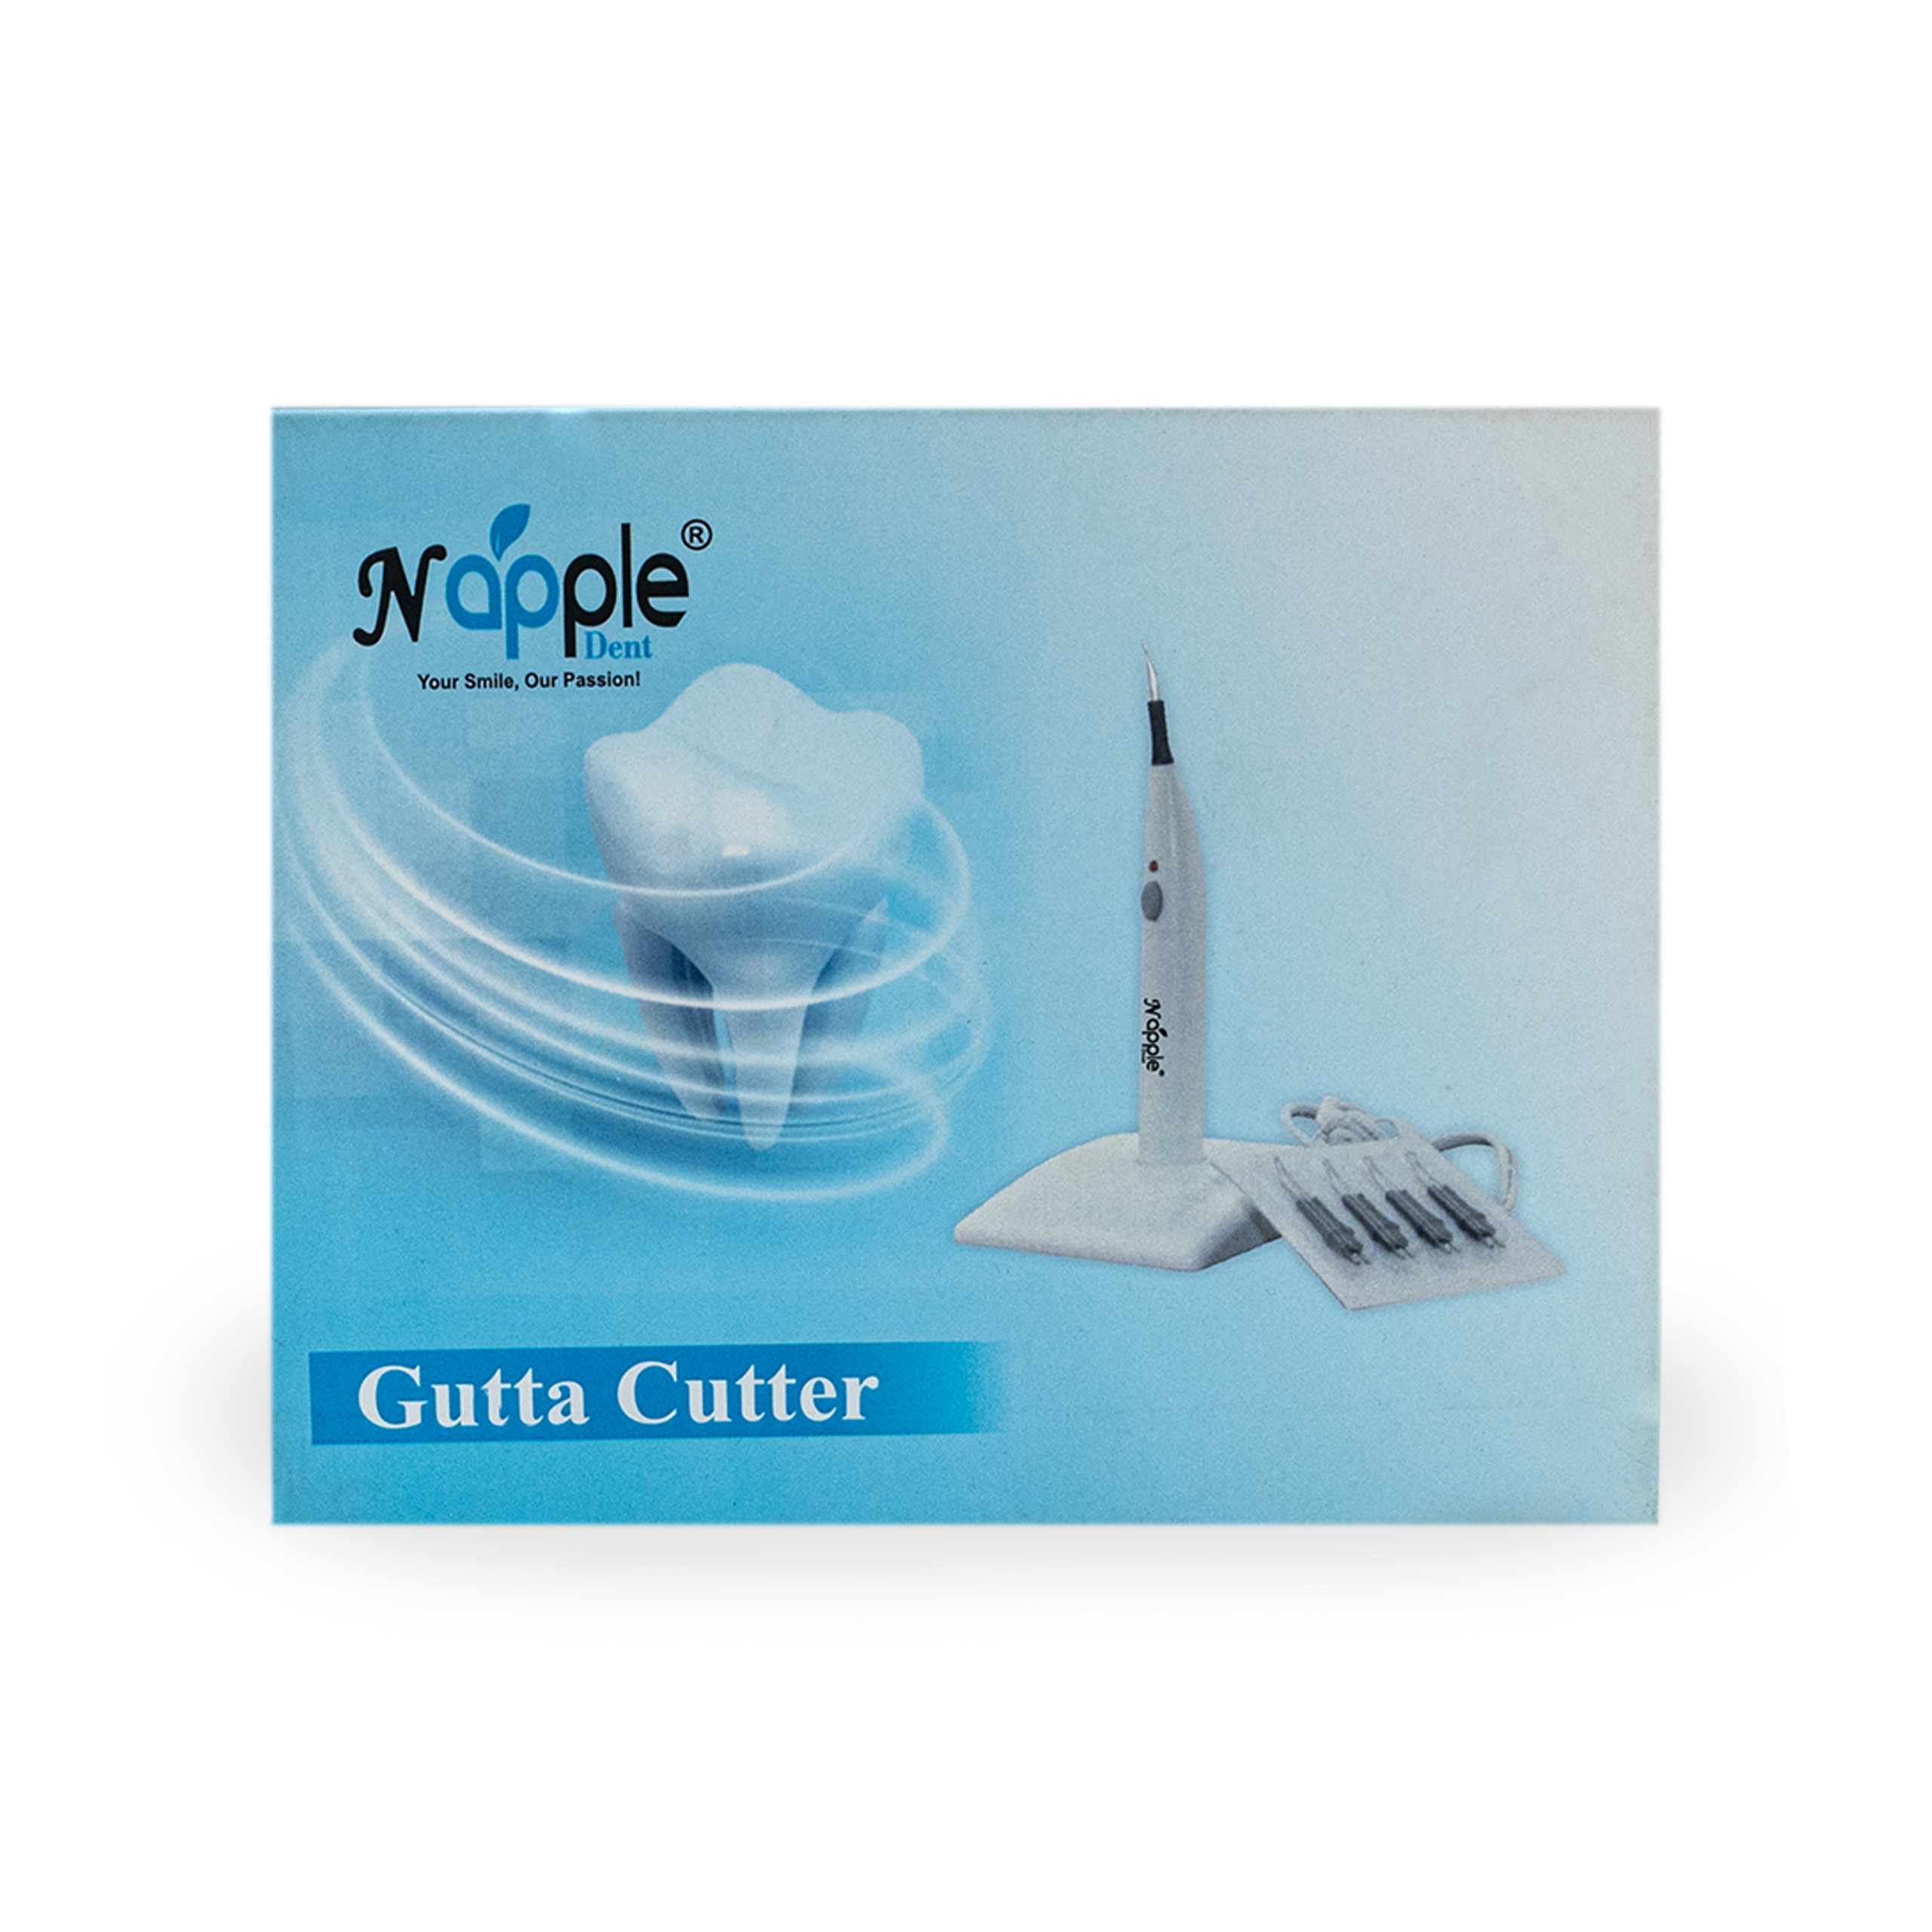 Napple Gutta Cutter (Electrical)